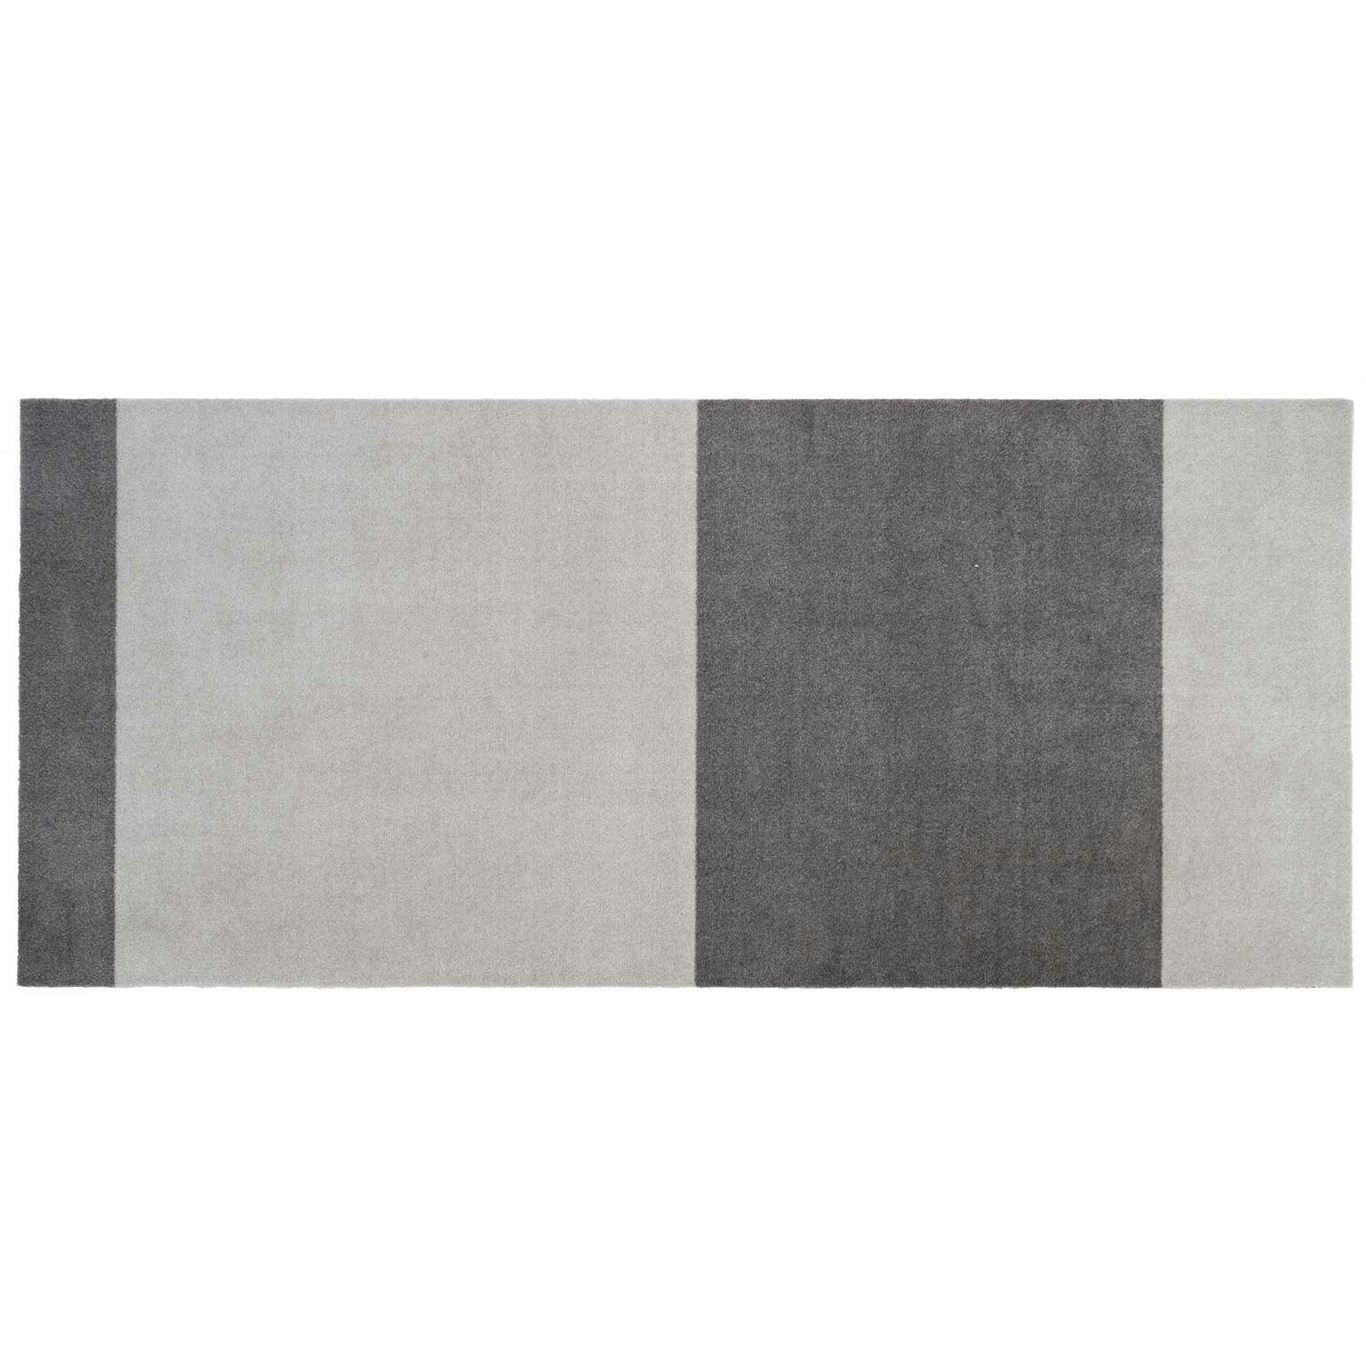 Stripes Vloerkleed Steel Grey / Lichtgrijs, 90x200 cm